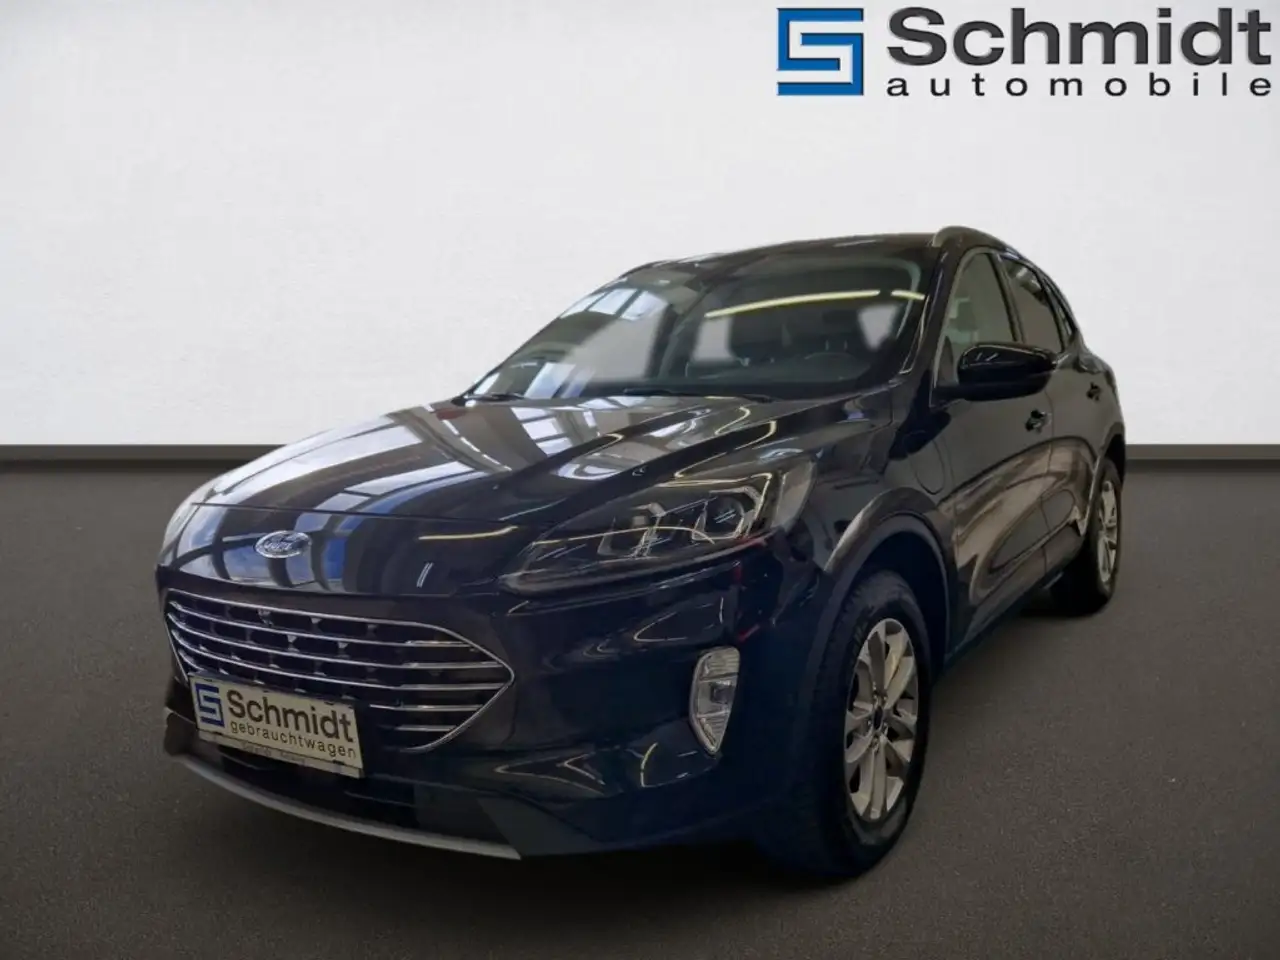 Ford Kuga SUV/4x4/Pick-up in Zwart tweedehands in Salzburg voor € 26.900,-